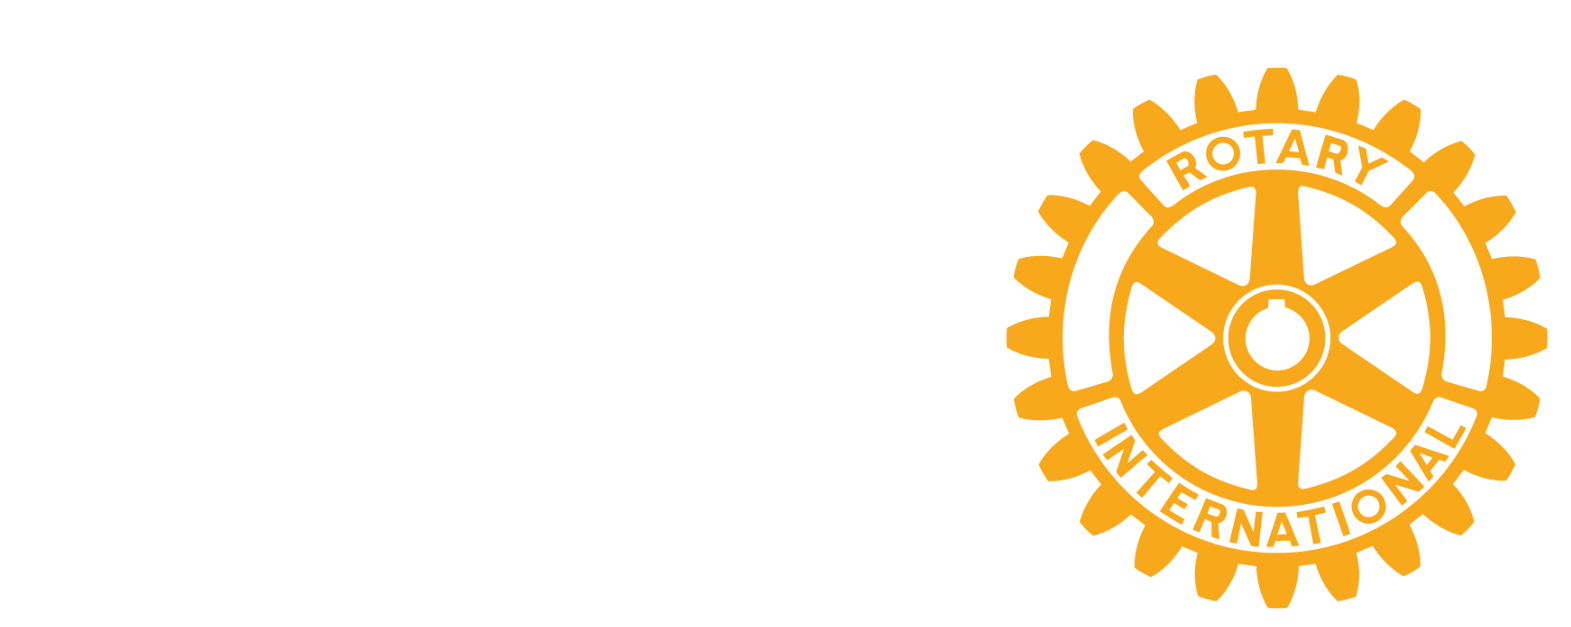 Plano Metro logo